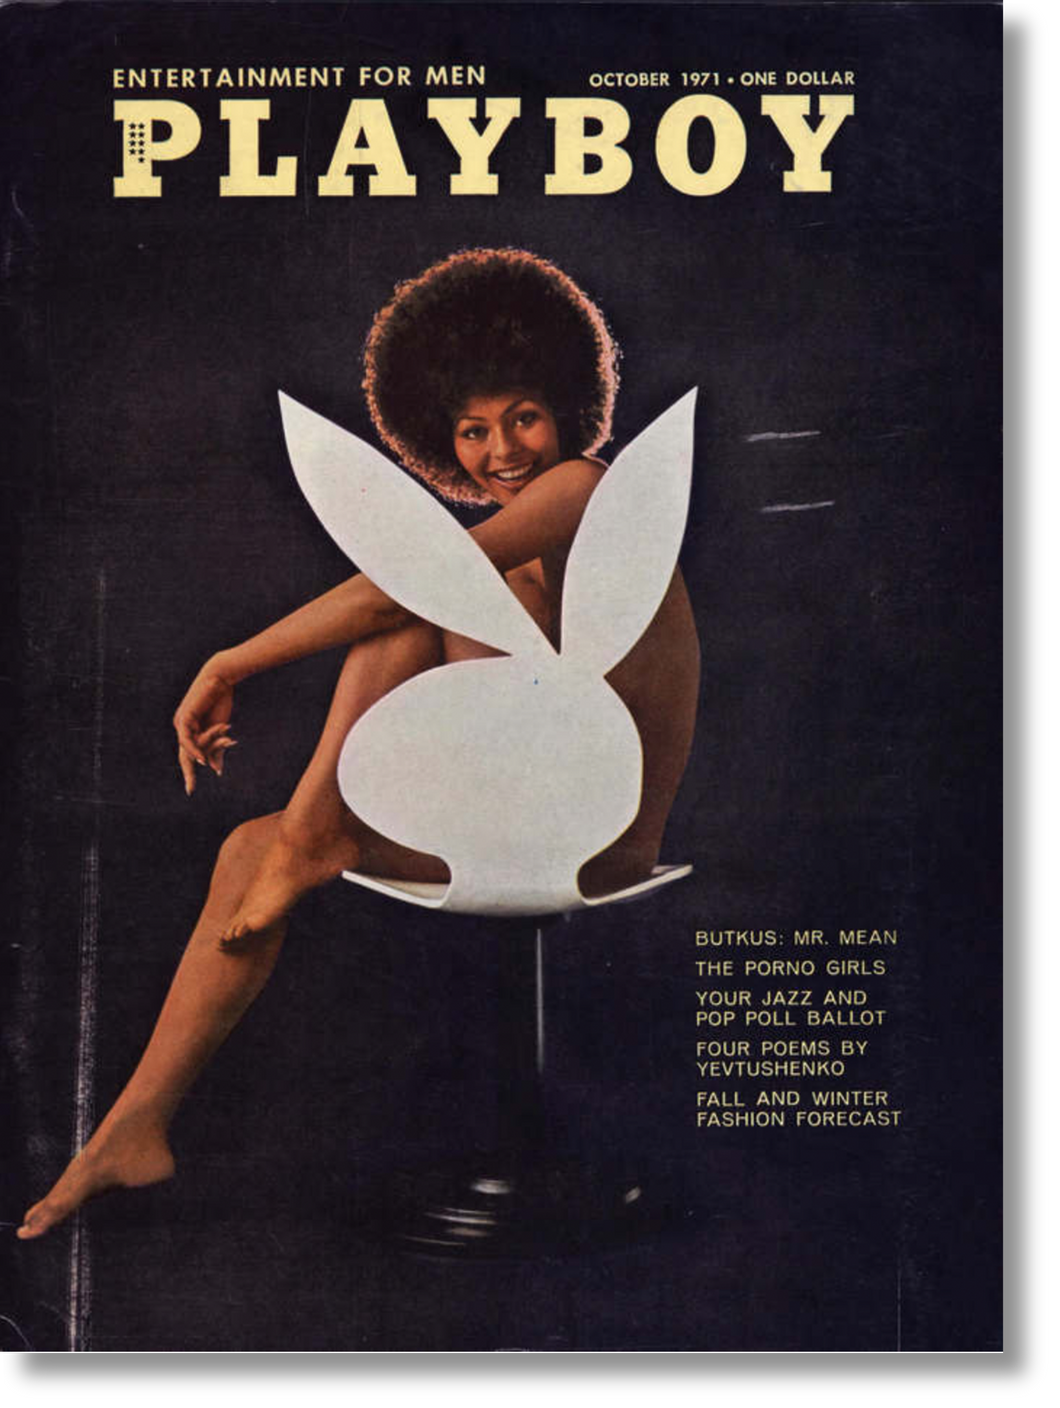 Vintage 1970's PLAYBOY Magazine - October 1971